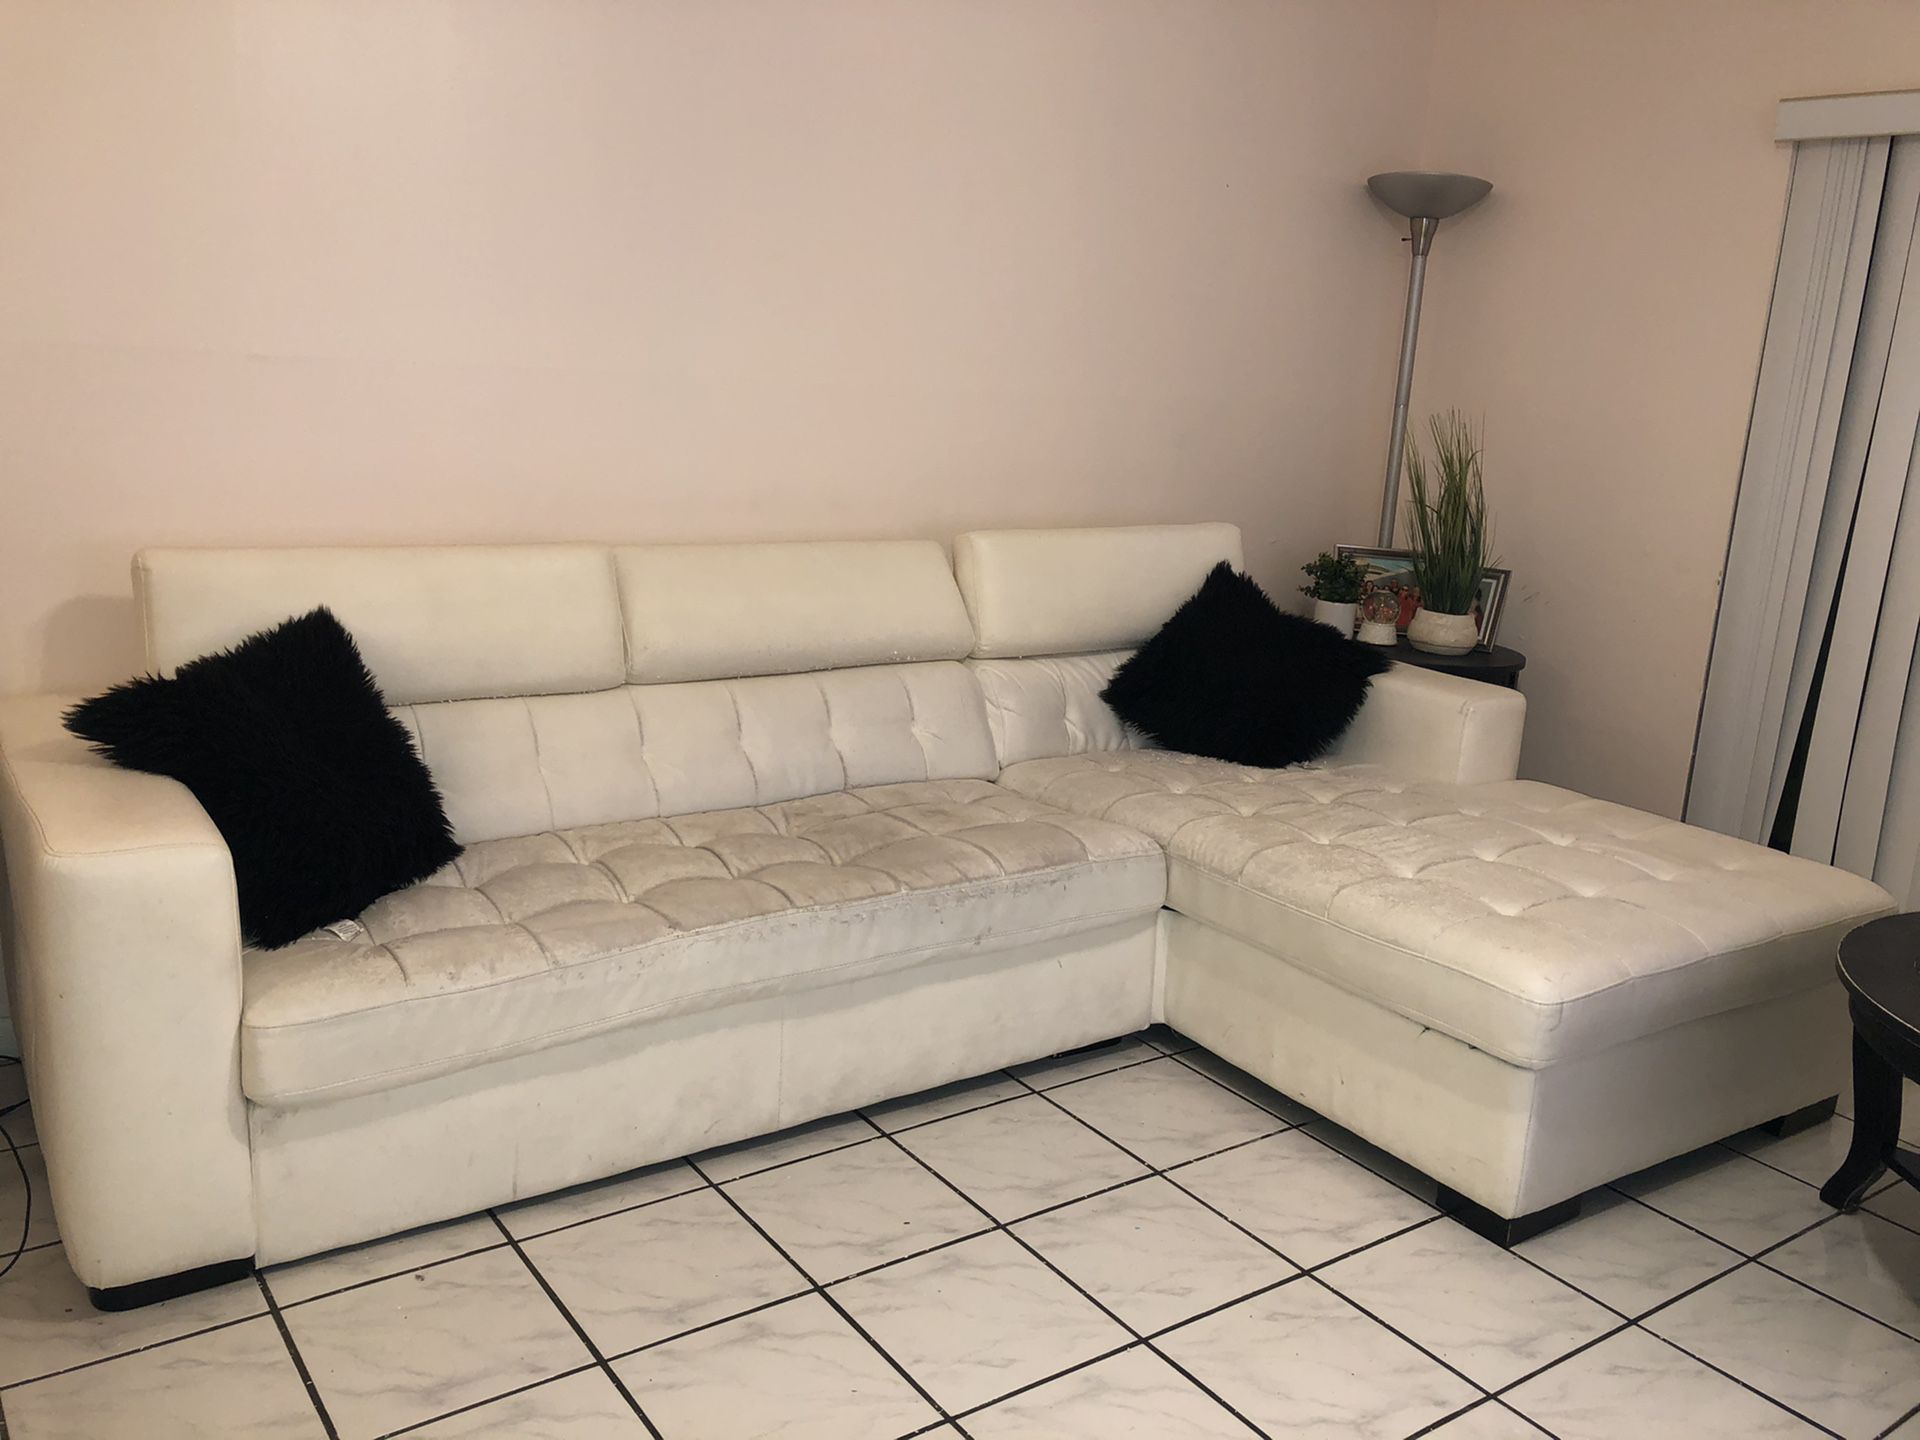 Sofa cama-seccional/ sofa bed seccional